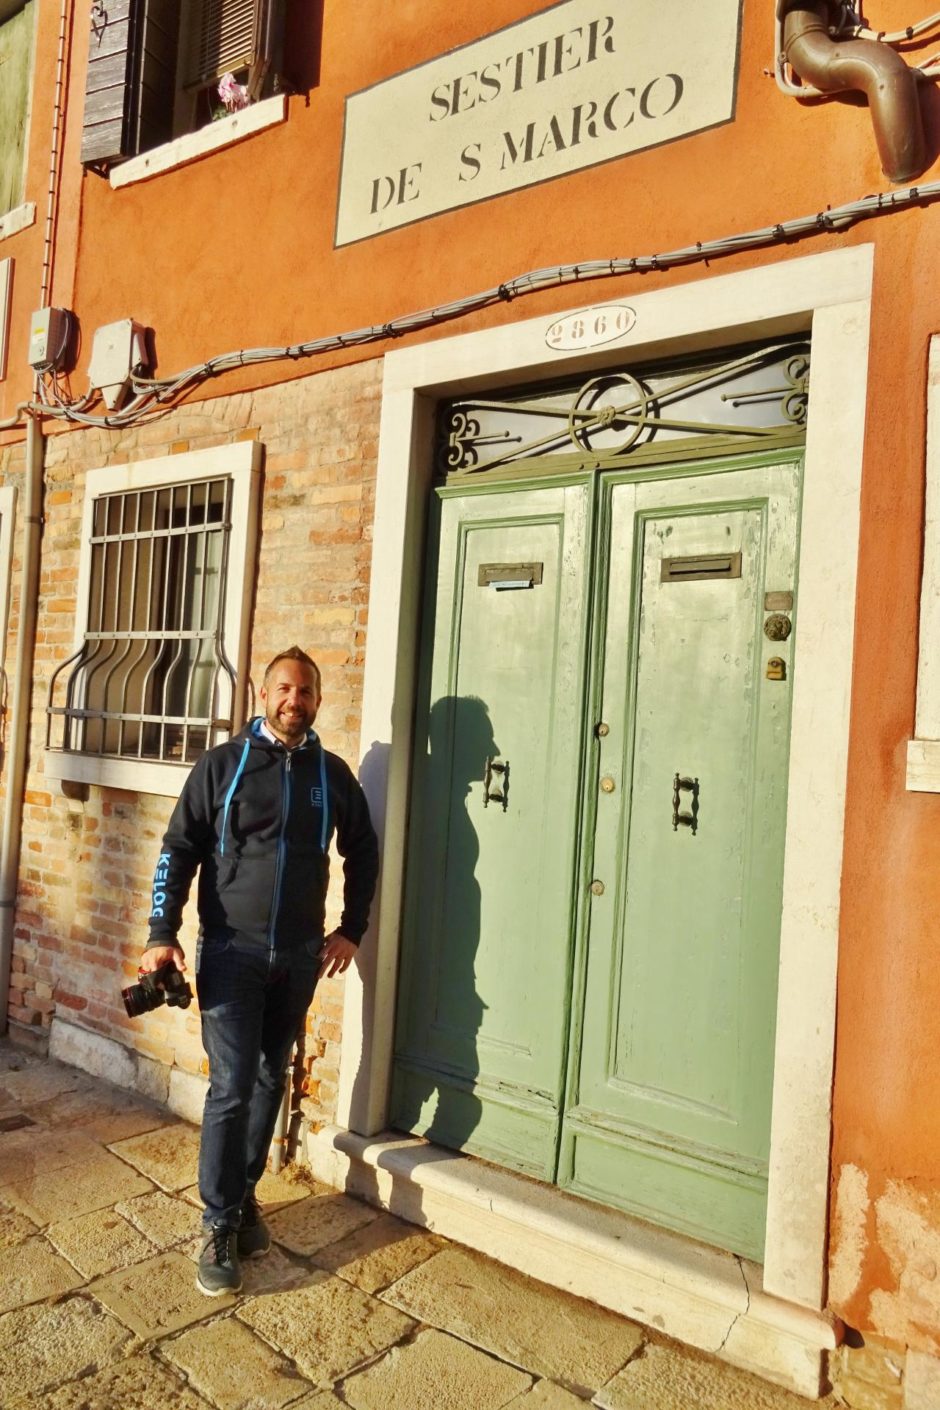 Vor dem Tor. - Eingangstür, Personen, Tür - WEISSINGER Andreas - (Dorsoduro, Veneto, Italien)